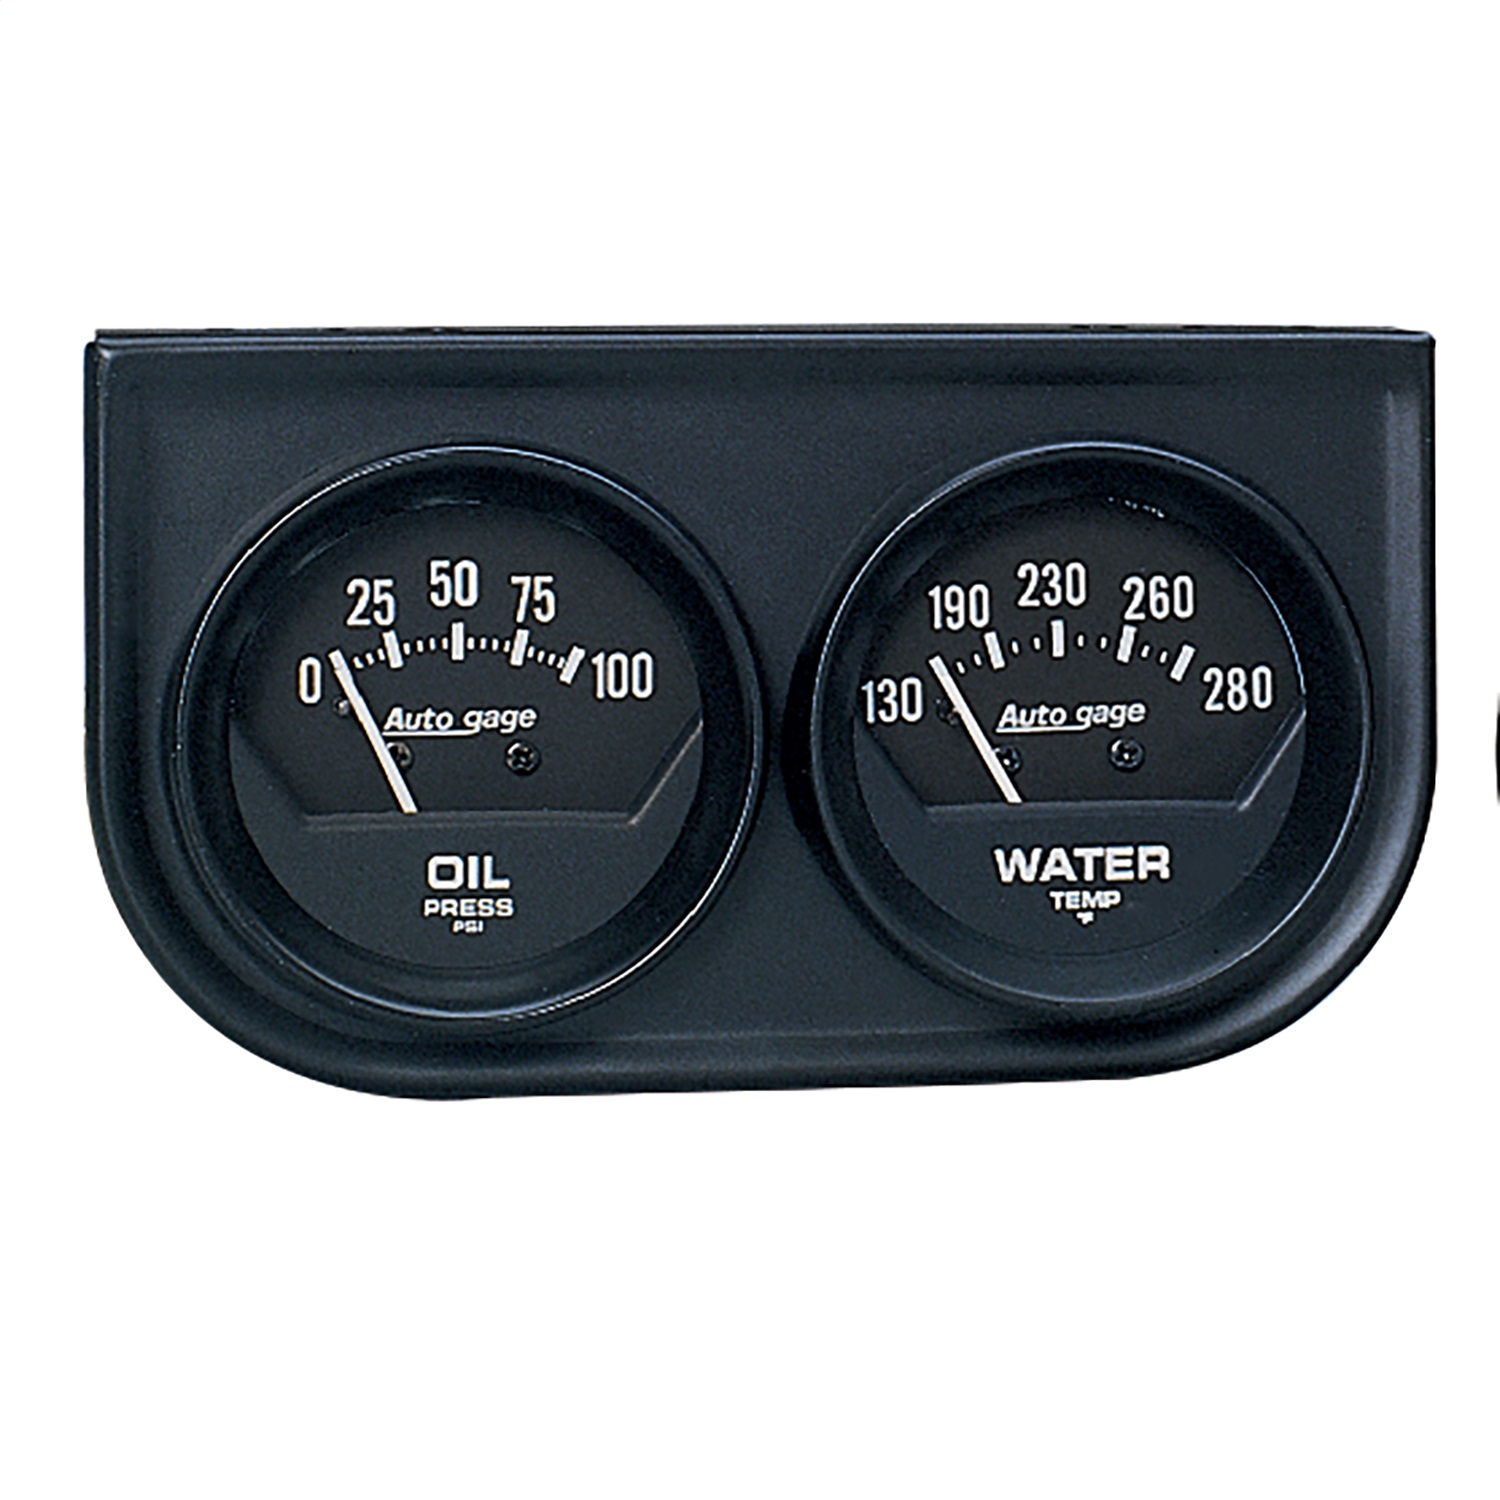 Auto Meter Auto Meter 2345 Autogage; Black Oil/Water; Black Console